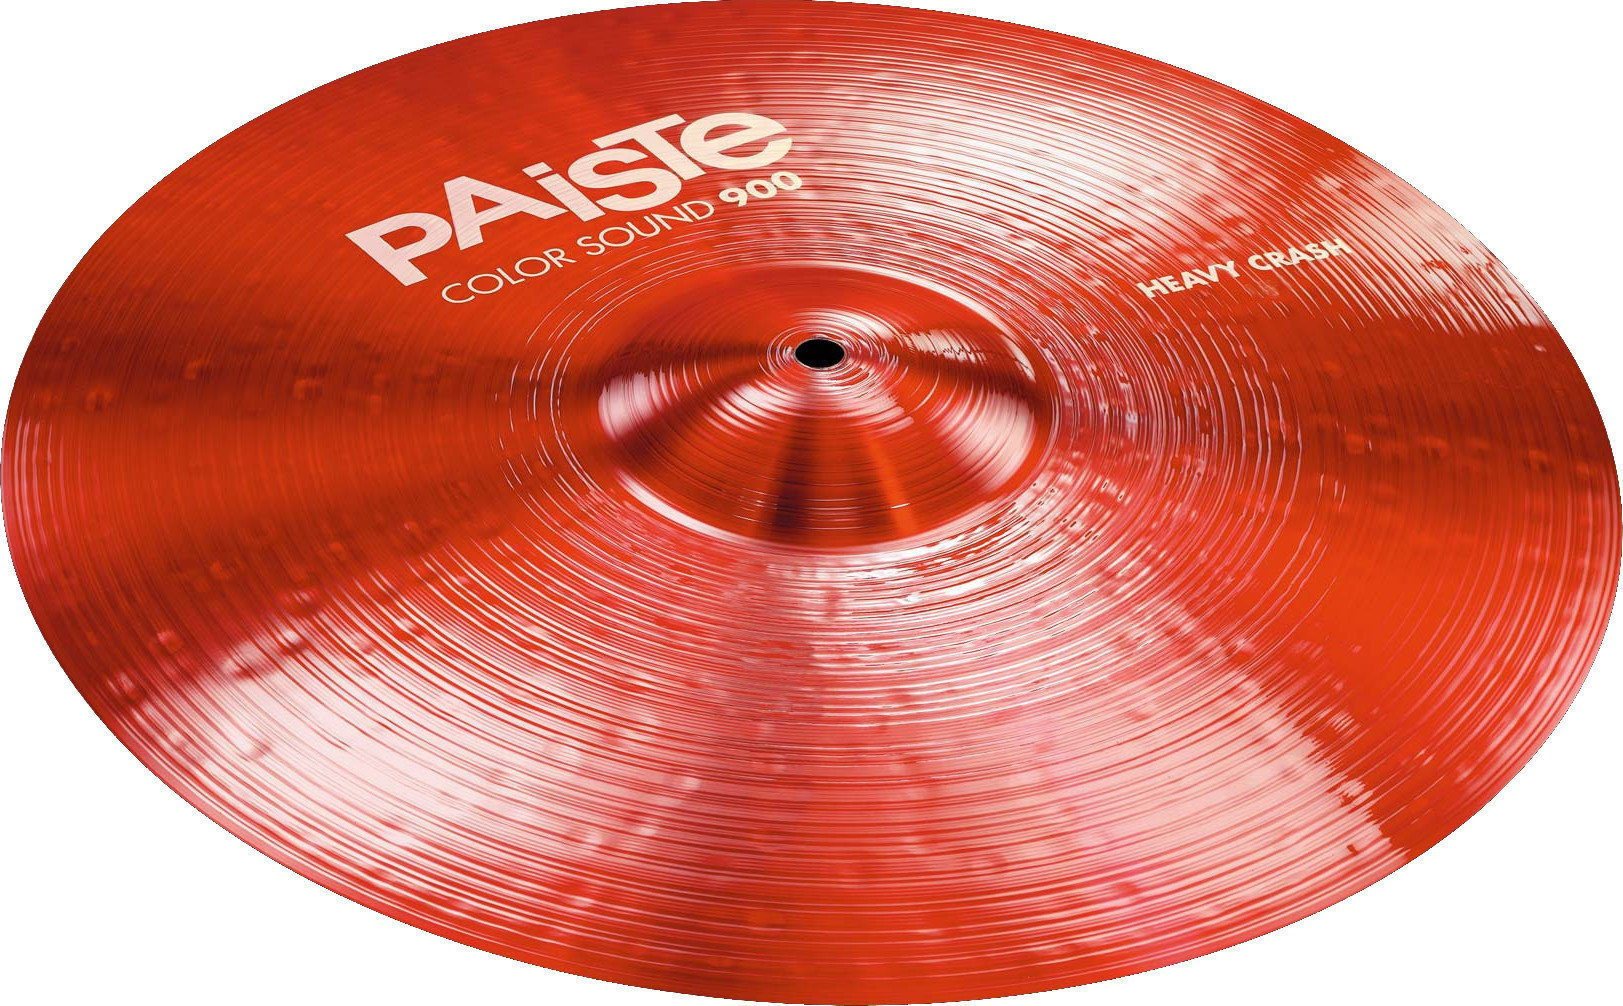 Crash Cymbal Paiste Color Sound 900  Heavy Crash Cymbal 16" Röd